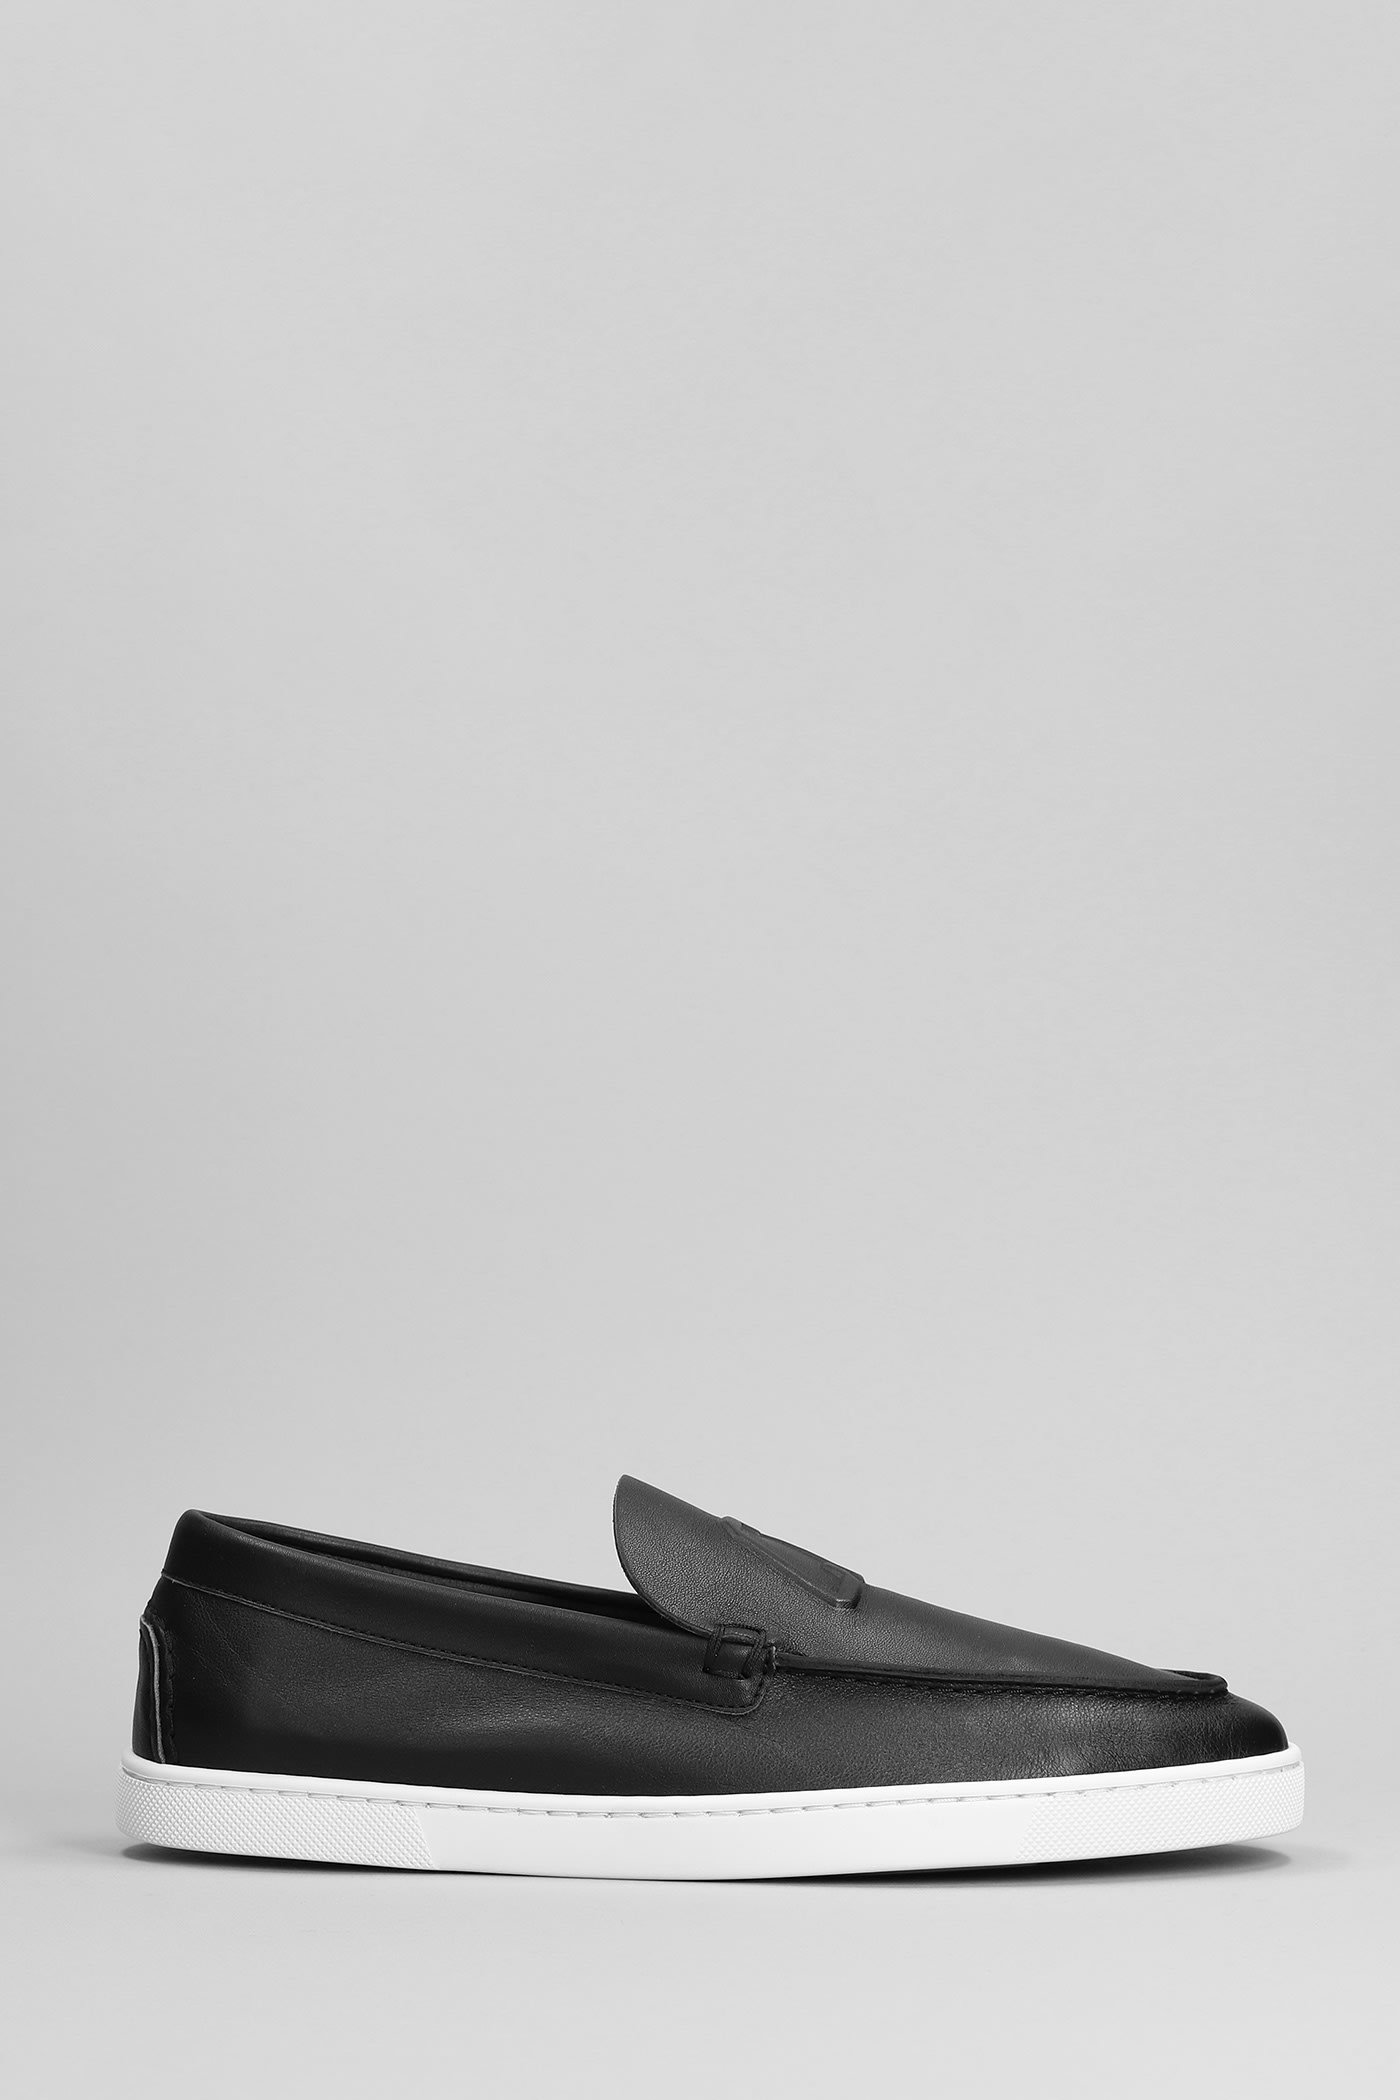 Varsiboat Loafers In Black Leather